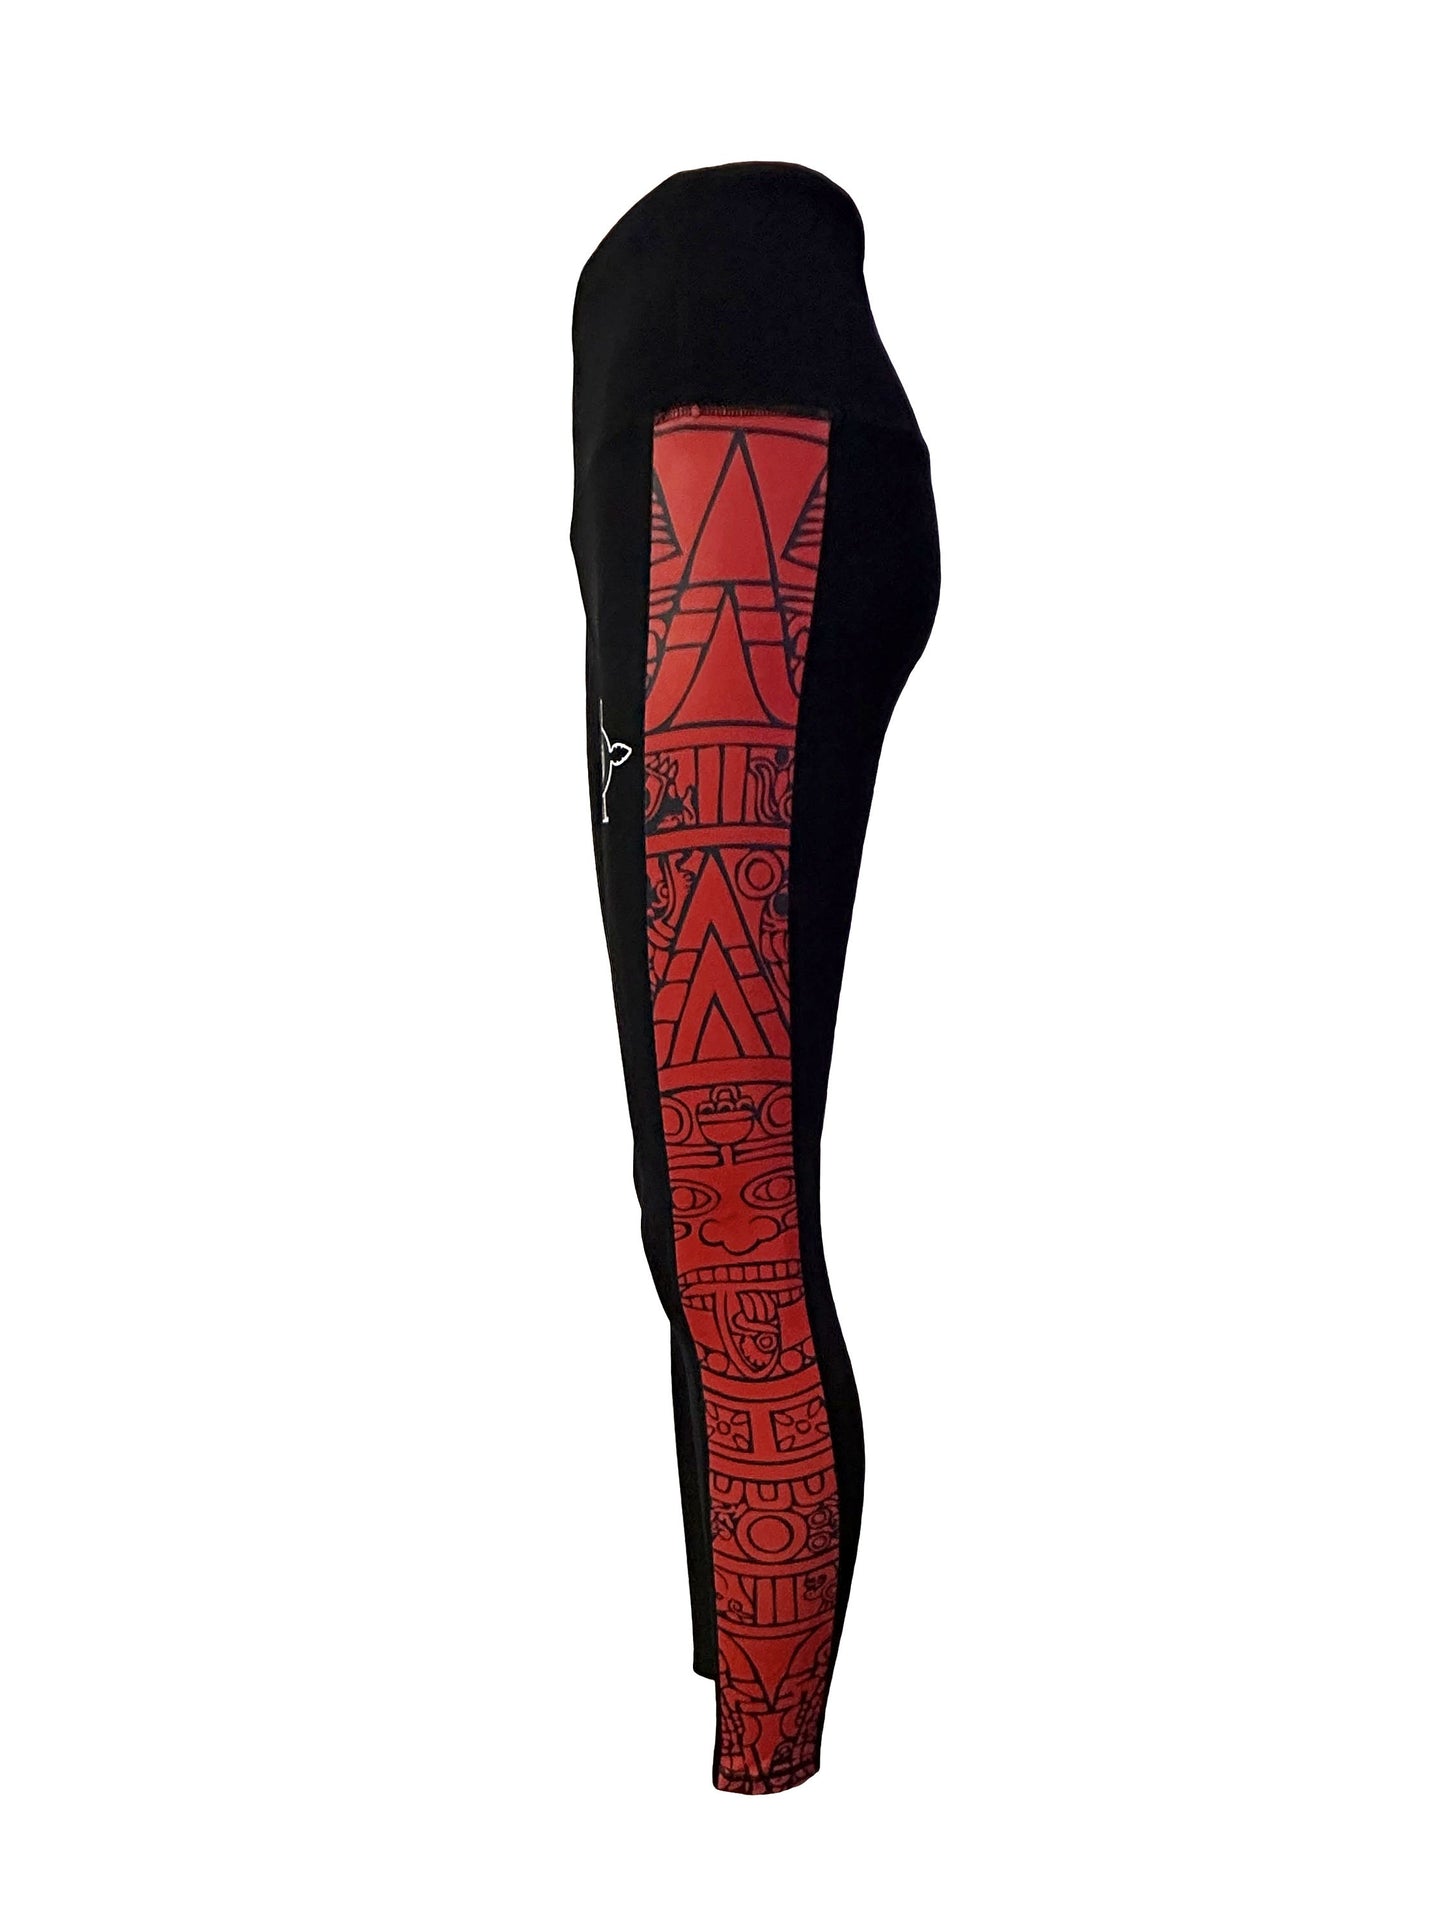 San Diego State SDSU Aztecs Women's Full Length Yoga Pant Leggings (Aztec Calendar printed on leg sides)